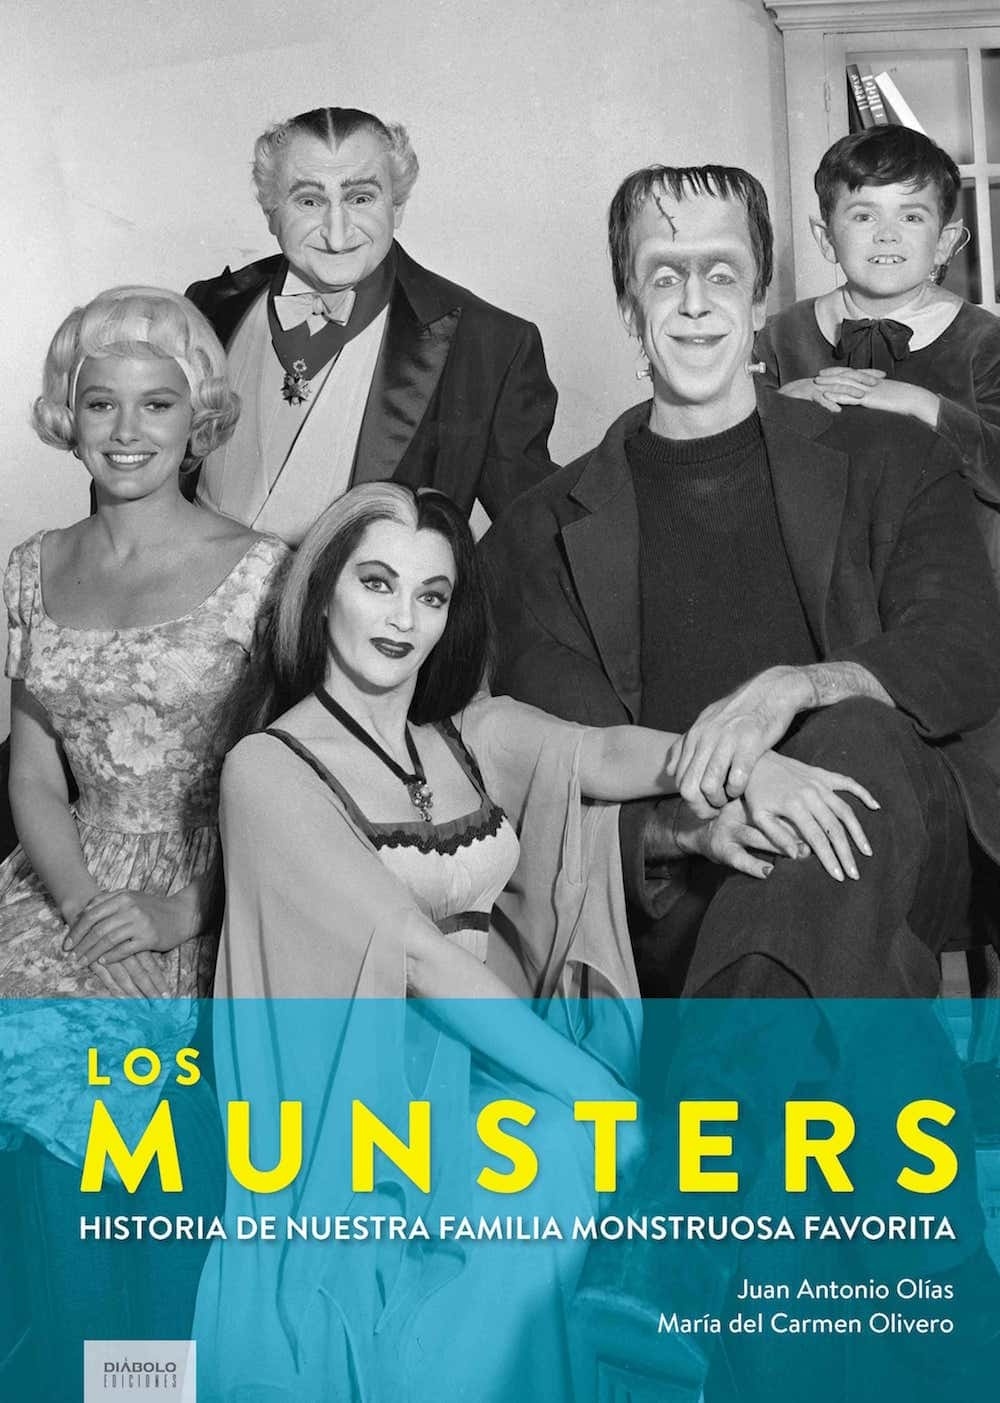 Munsters. Historia de nuestra familia monstruosa favorita. 